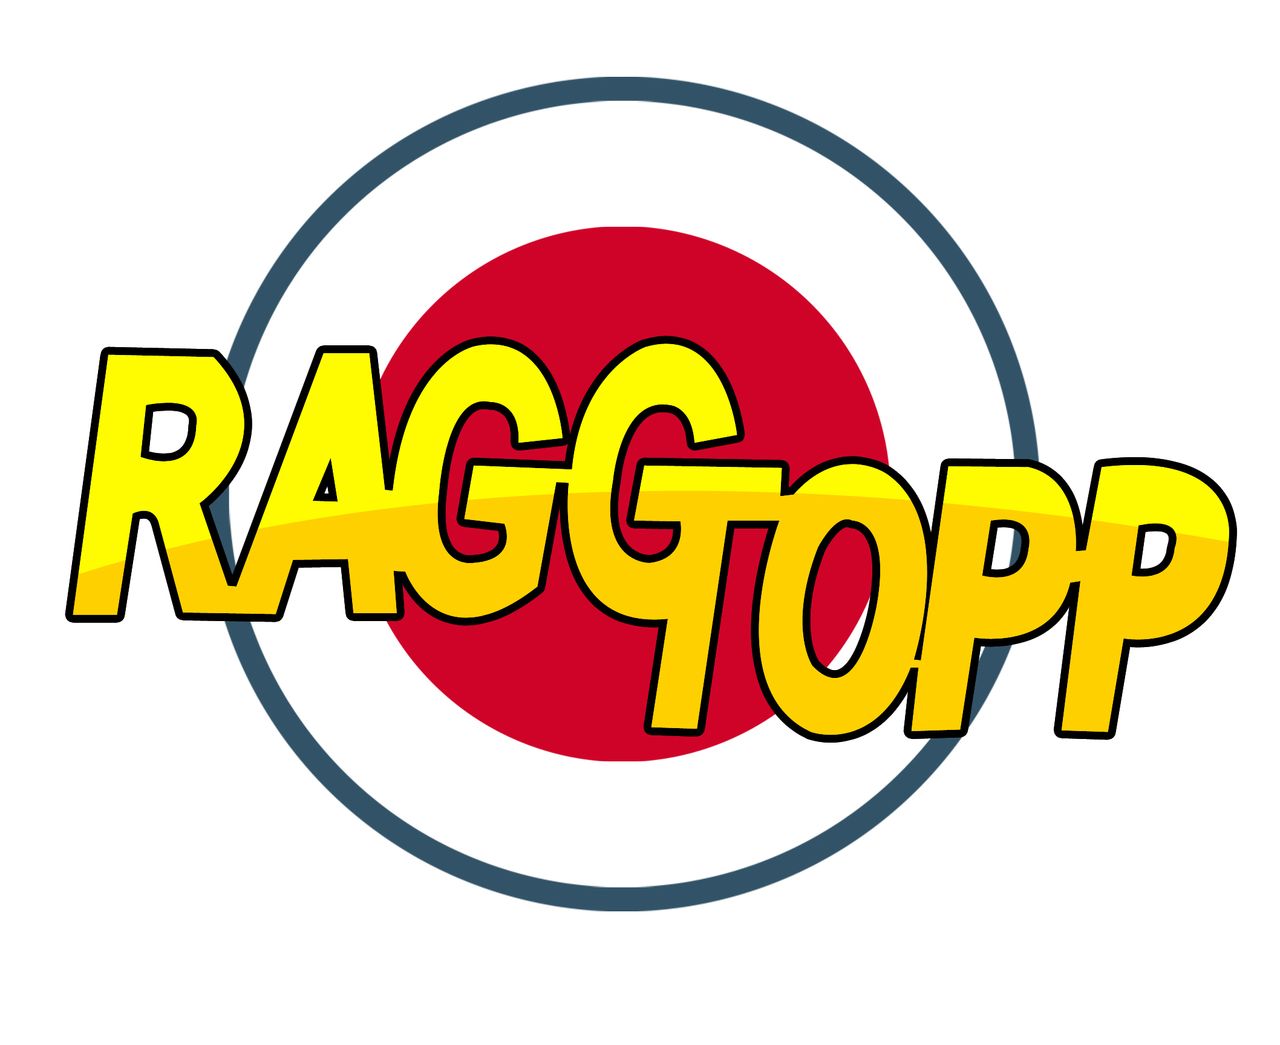 RAGGTOPP